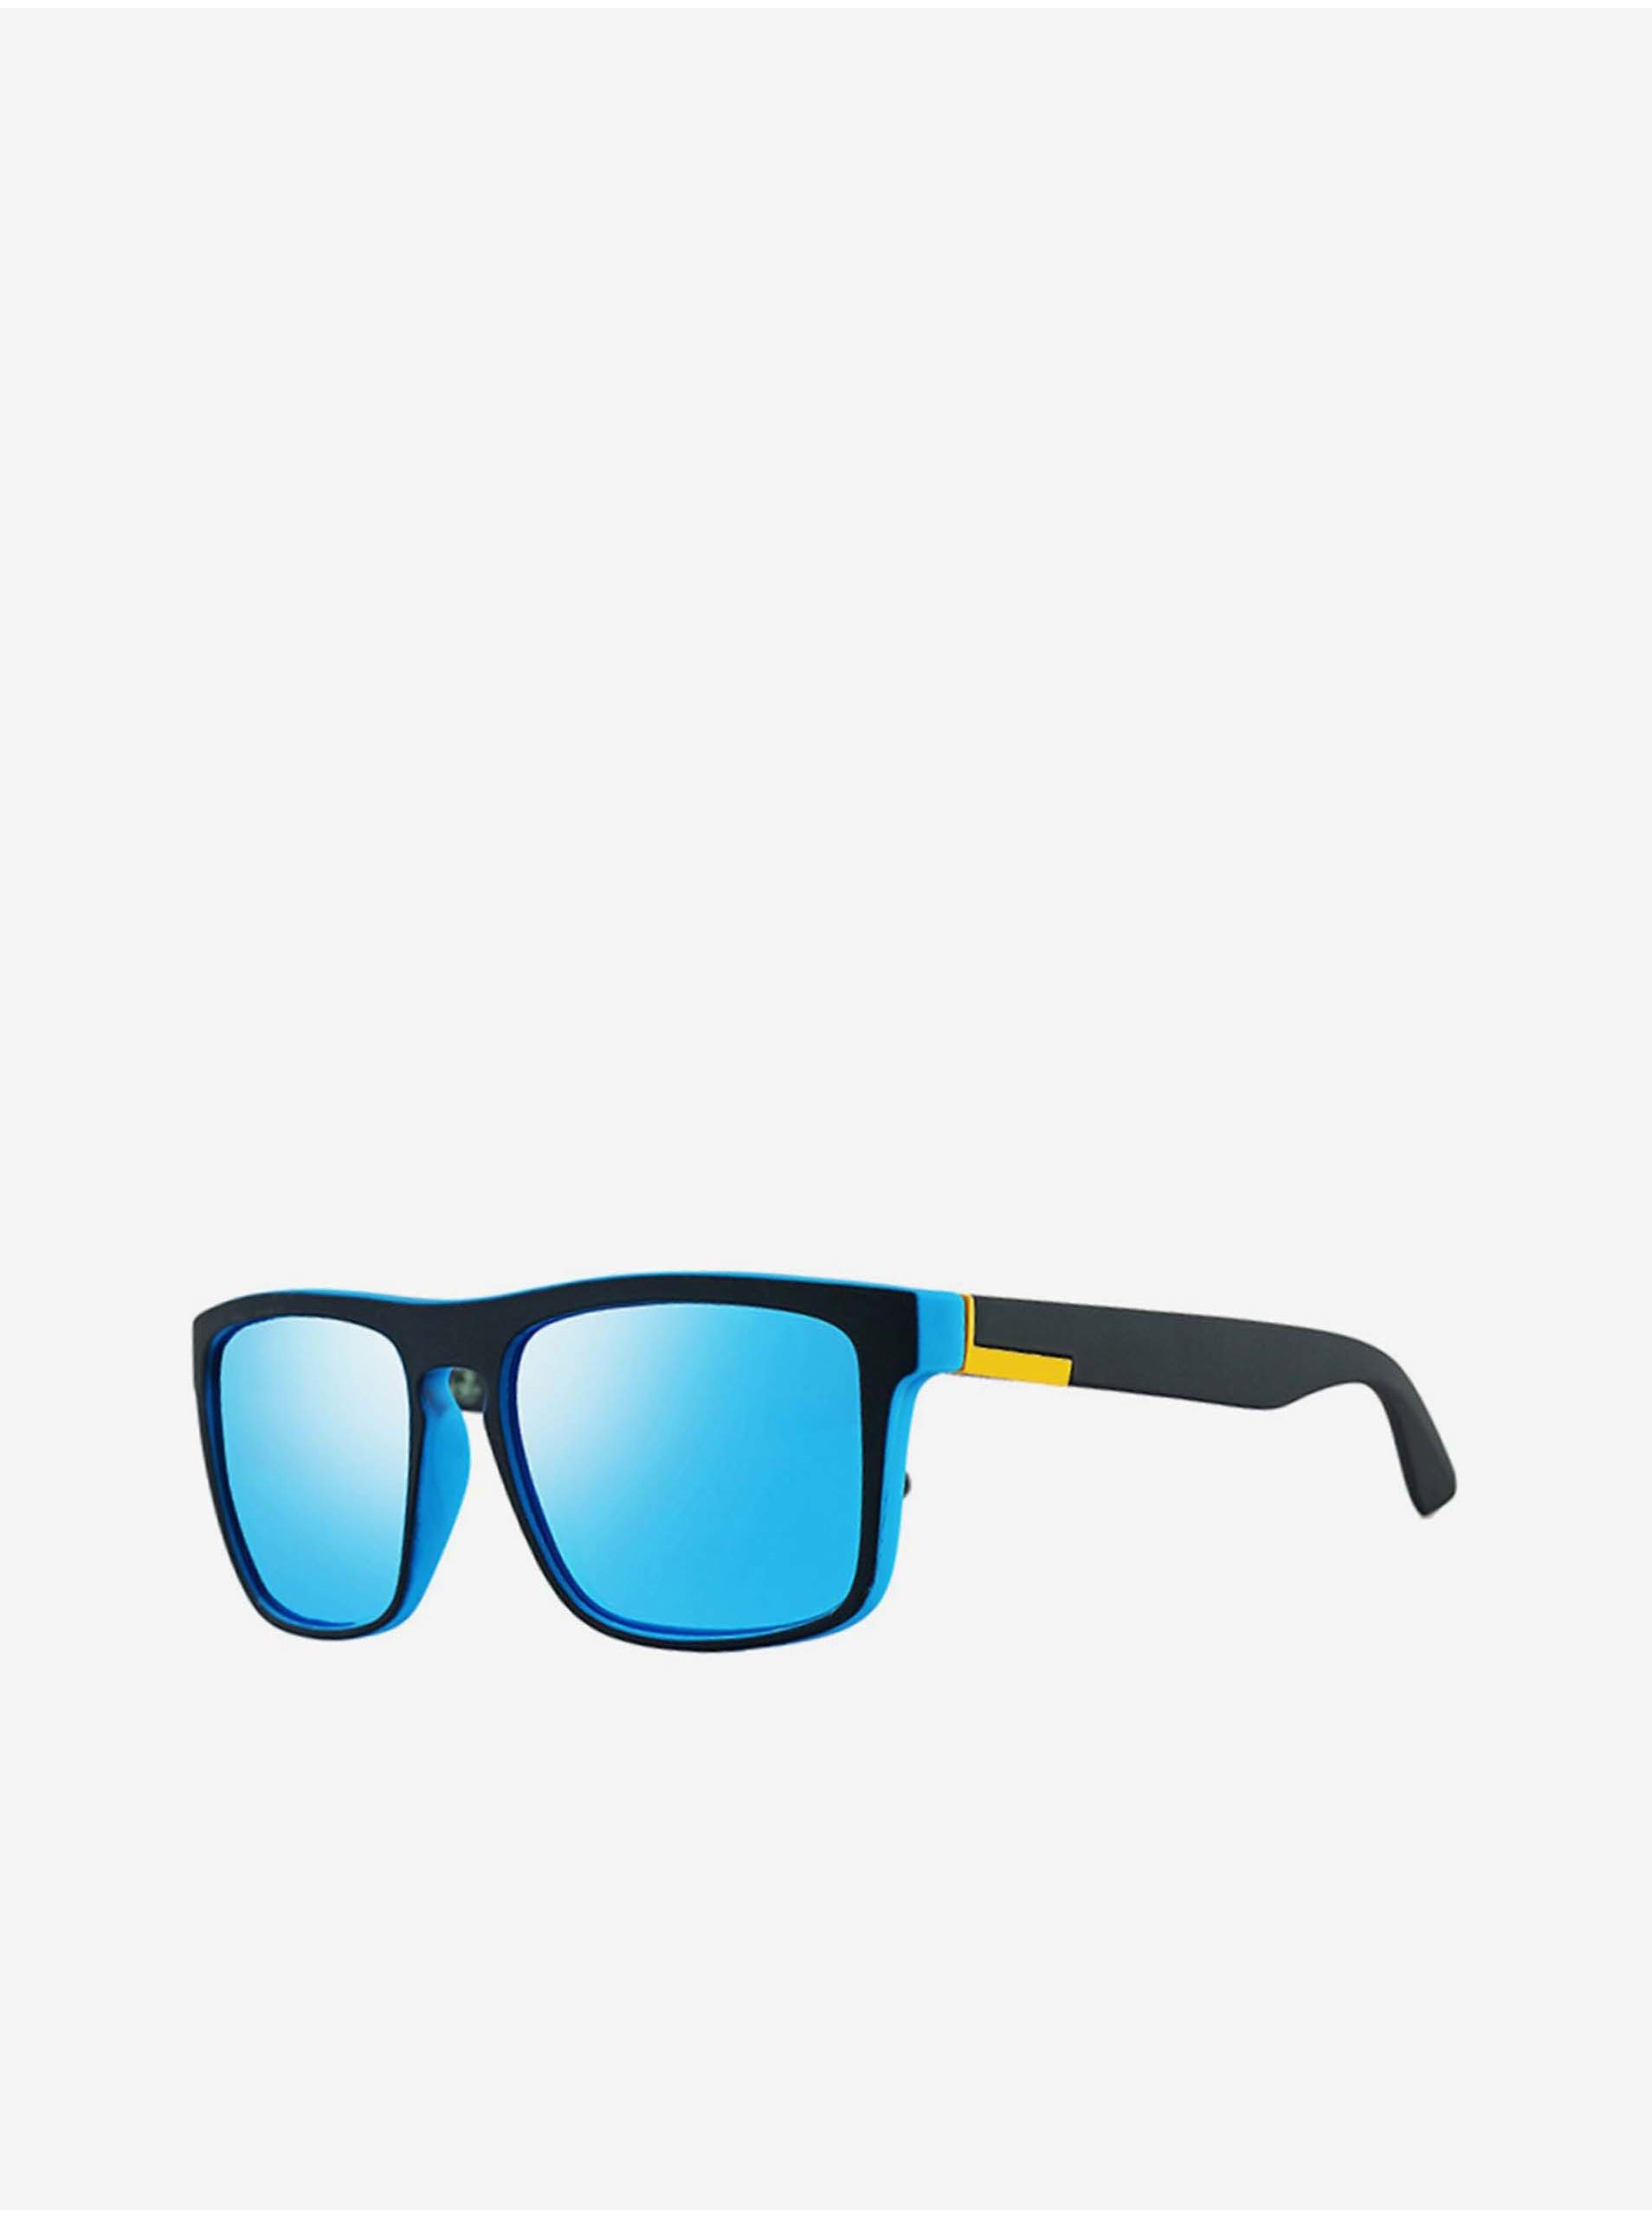 Lacno VeyRey Polarizačné slnečné okuliare Nerd Robert modré